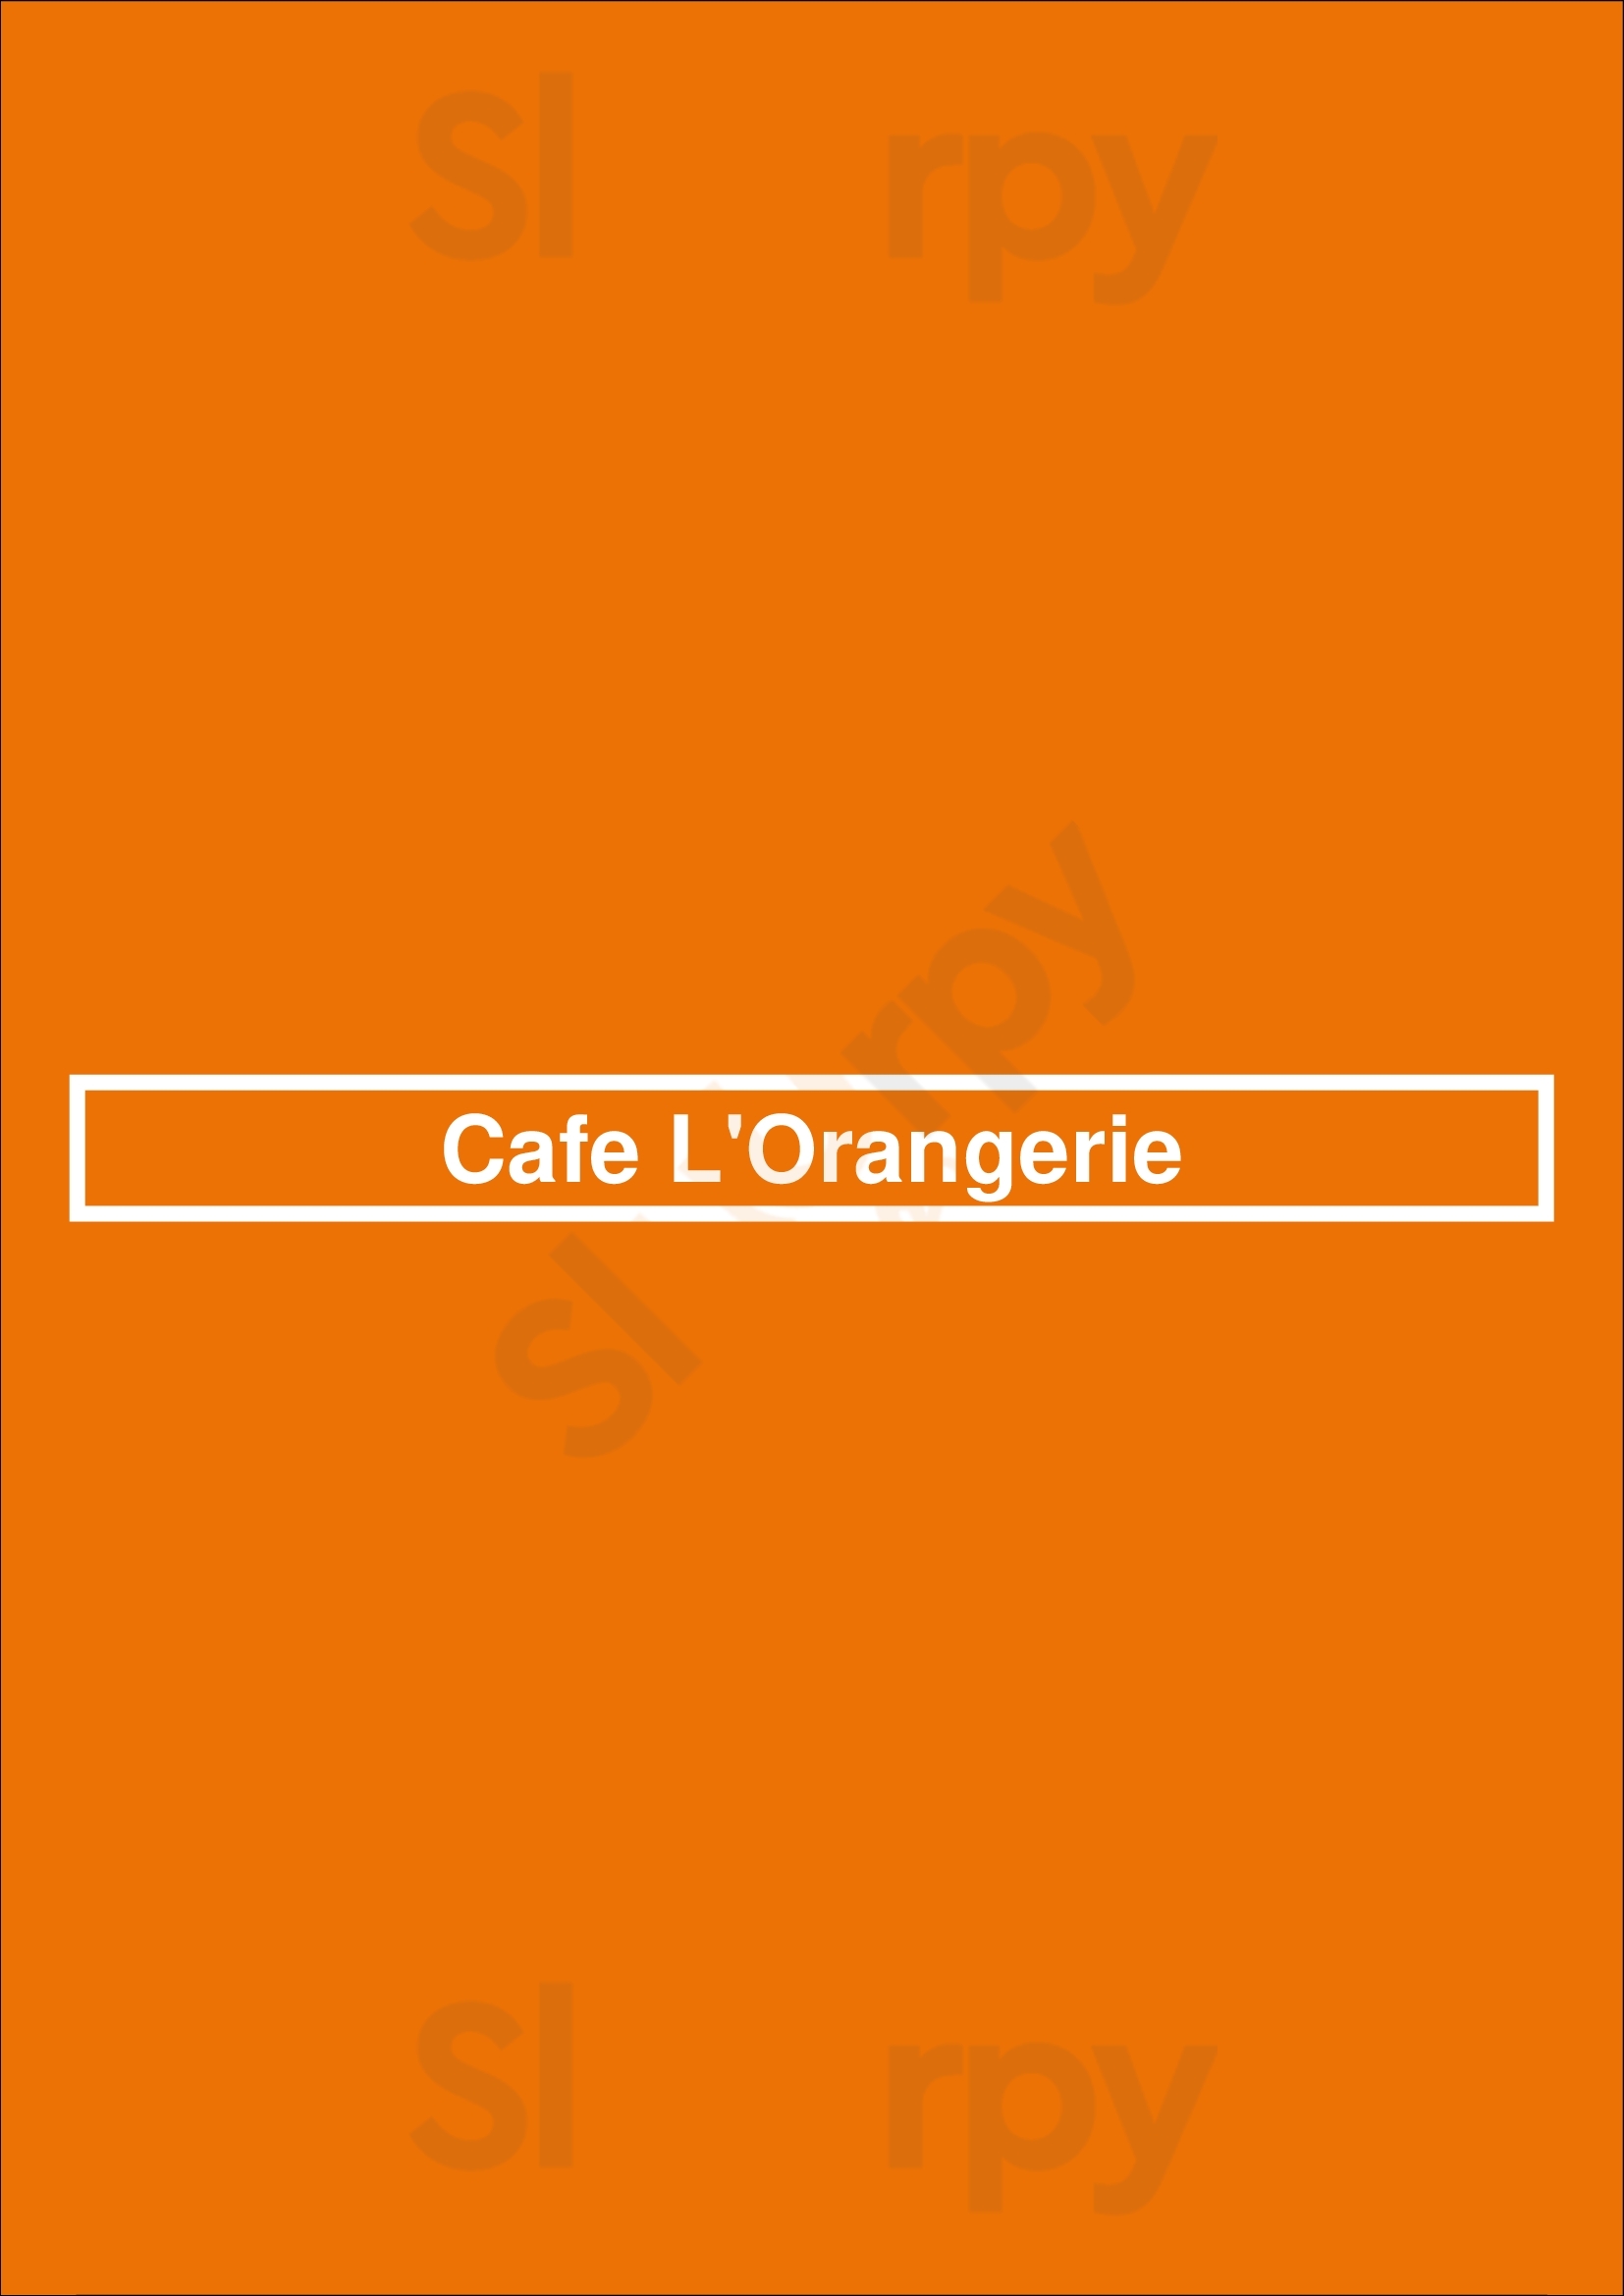 Cafe L'orangerie Vancouver Menu - 1